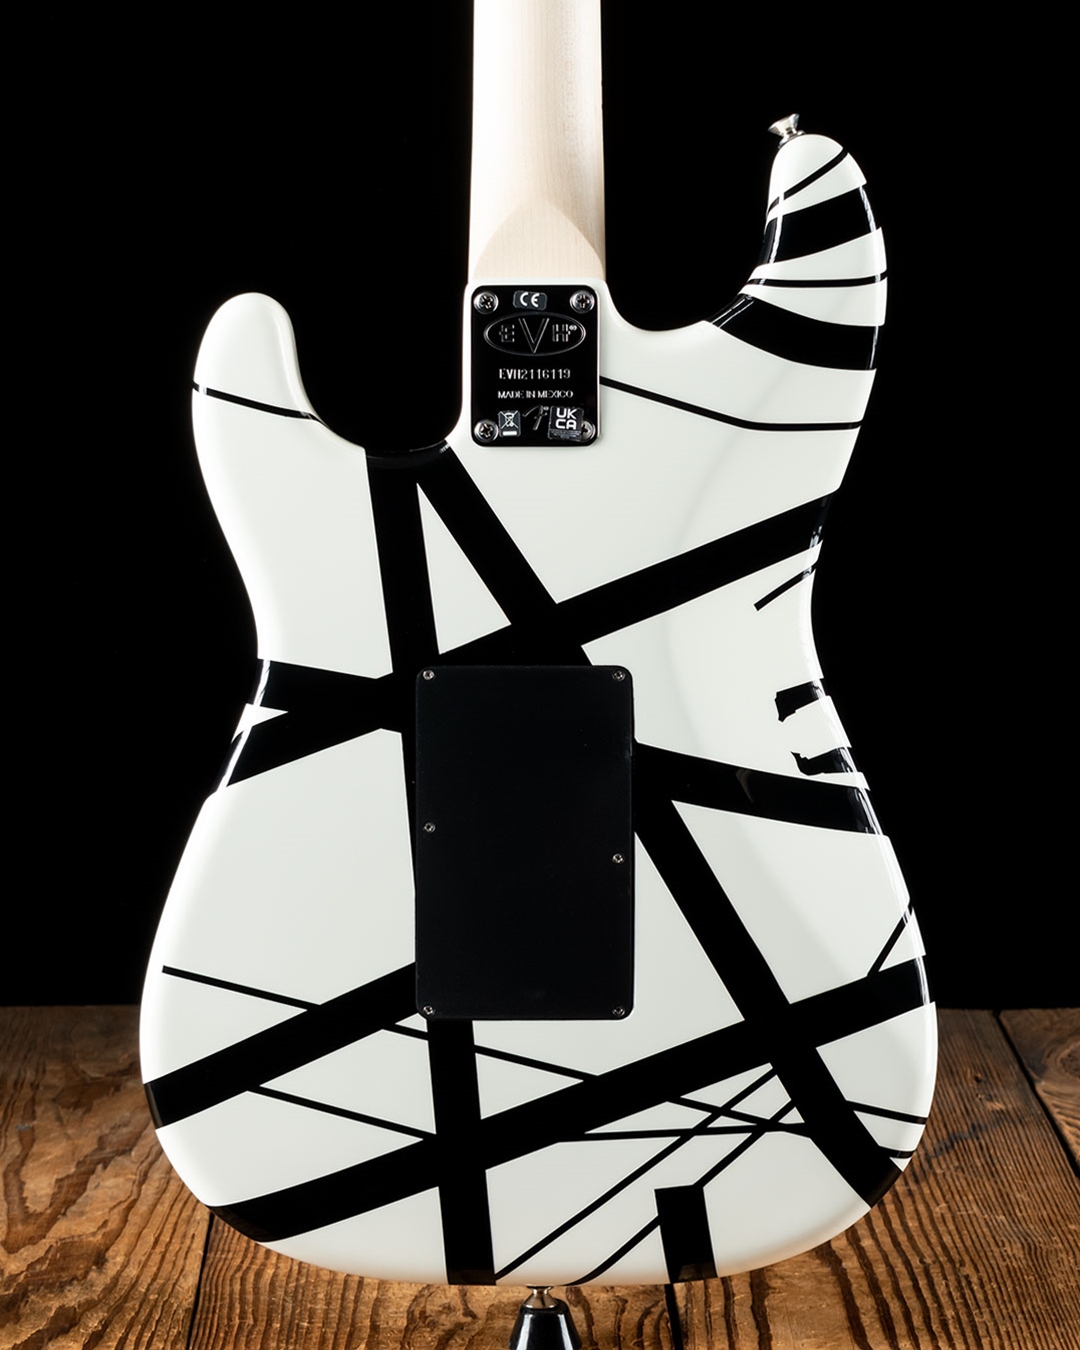 EVH Striped Series - White with Black Stripes